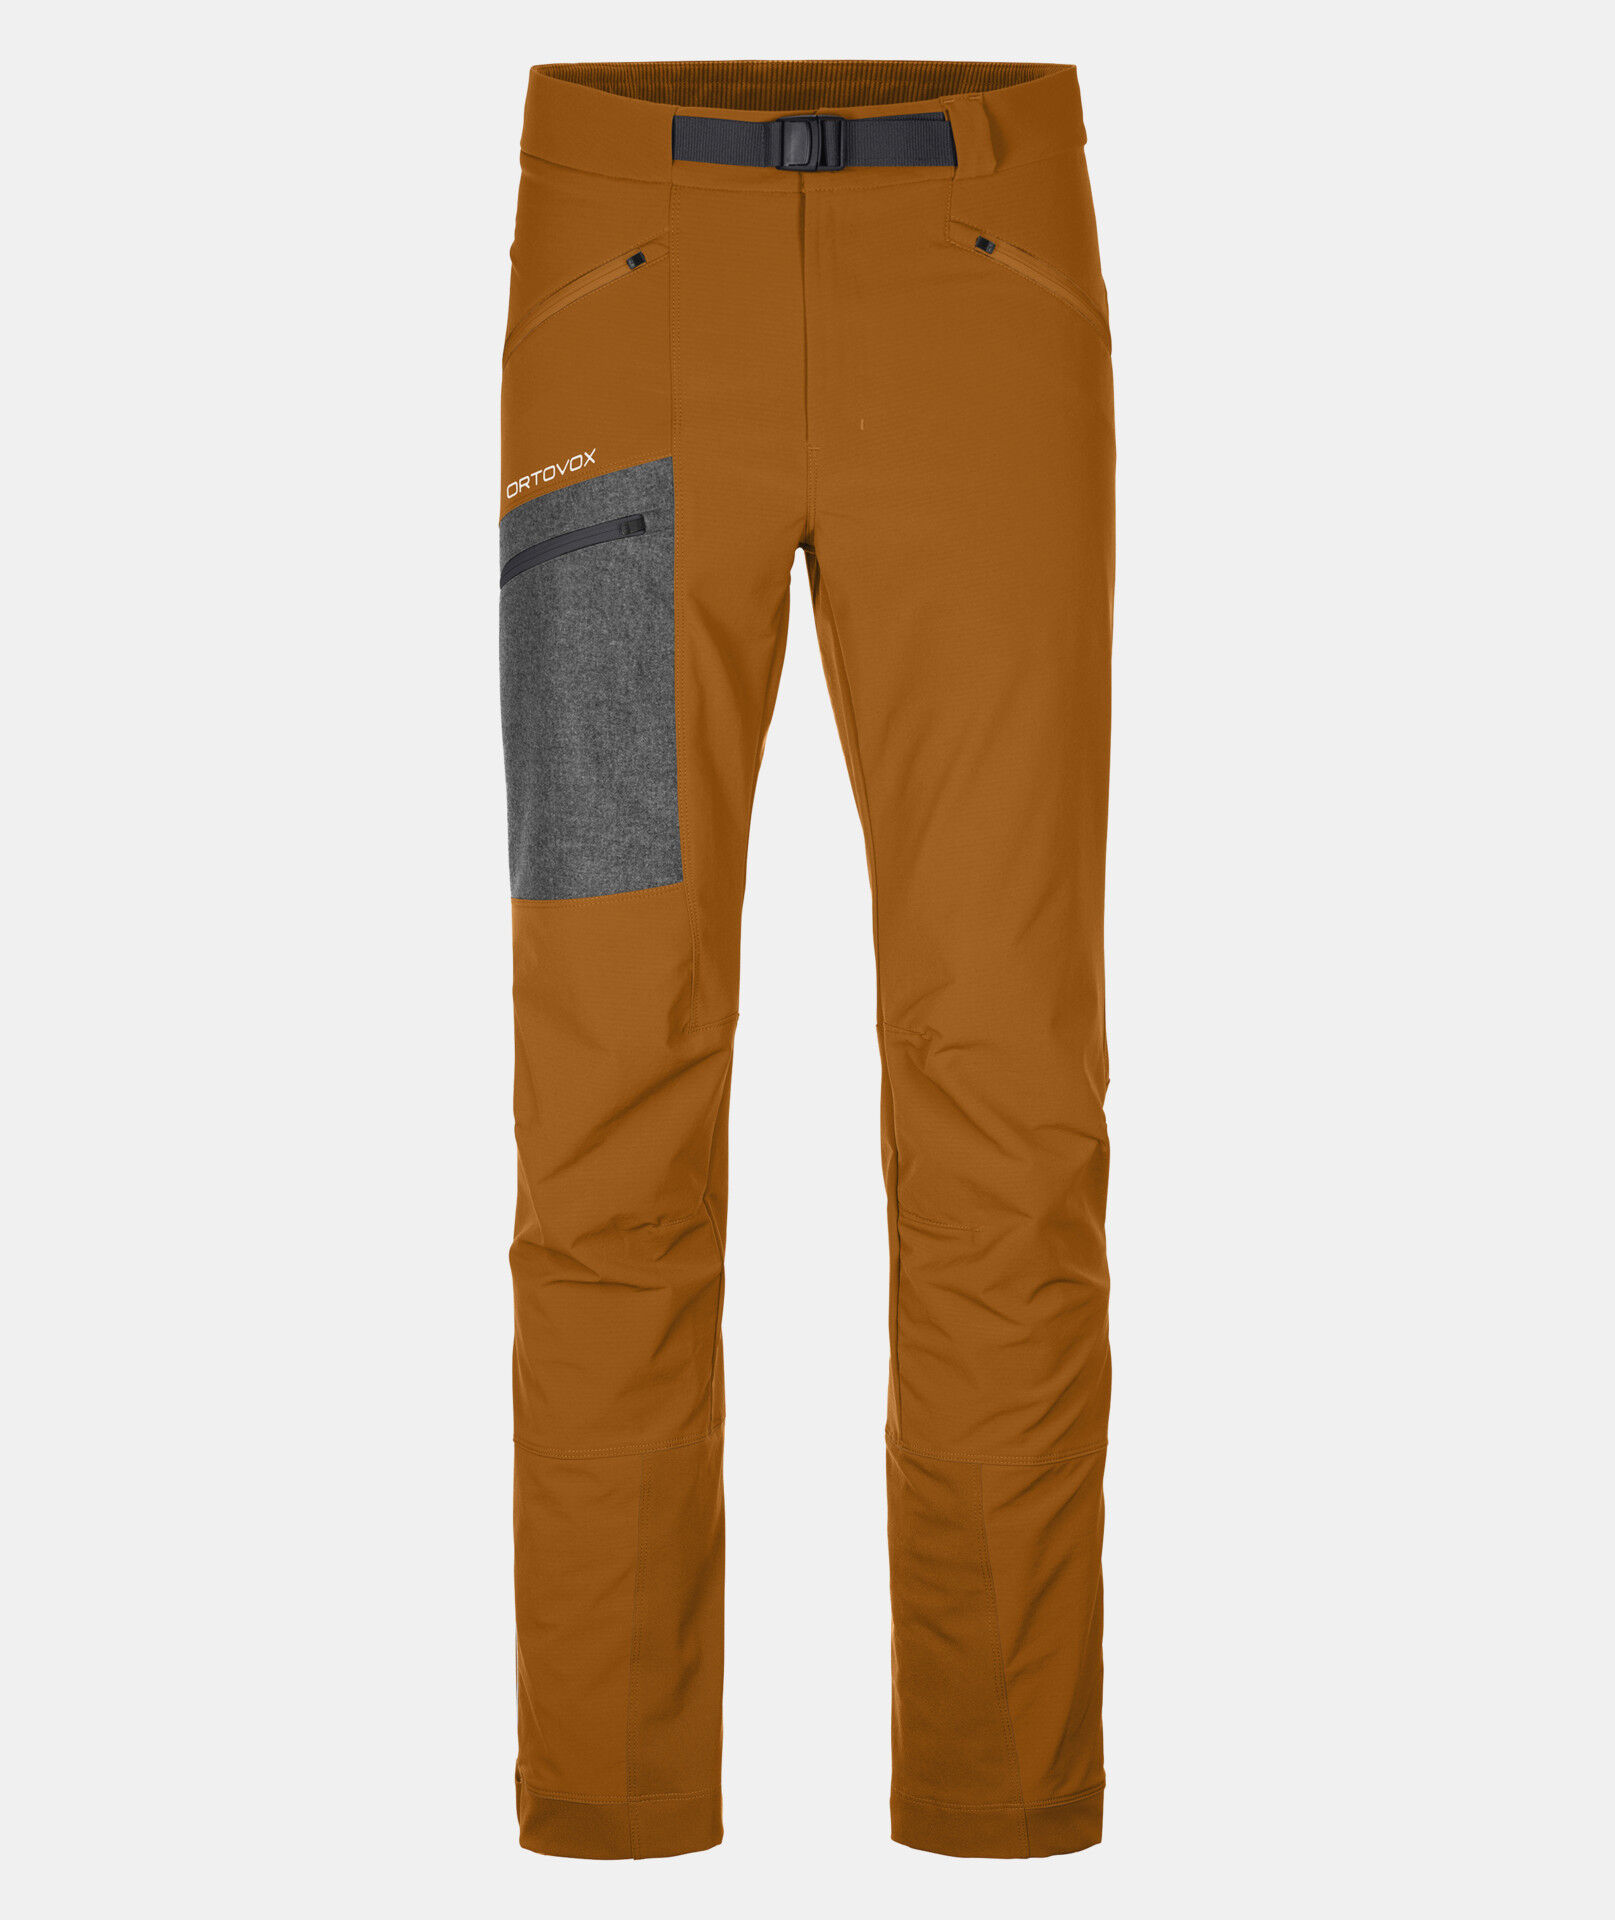 Ortovox Cevedale Pants - Softshell trousers - Men's